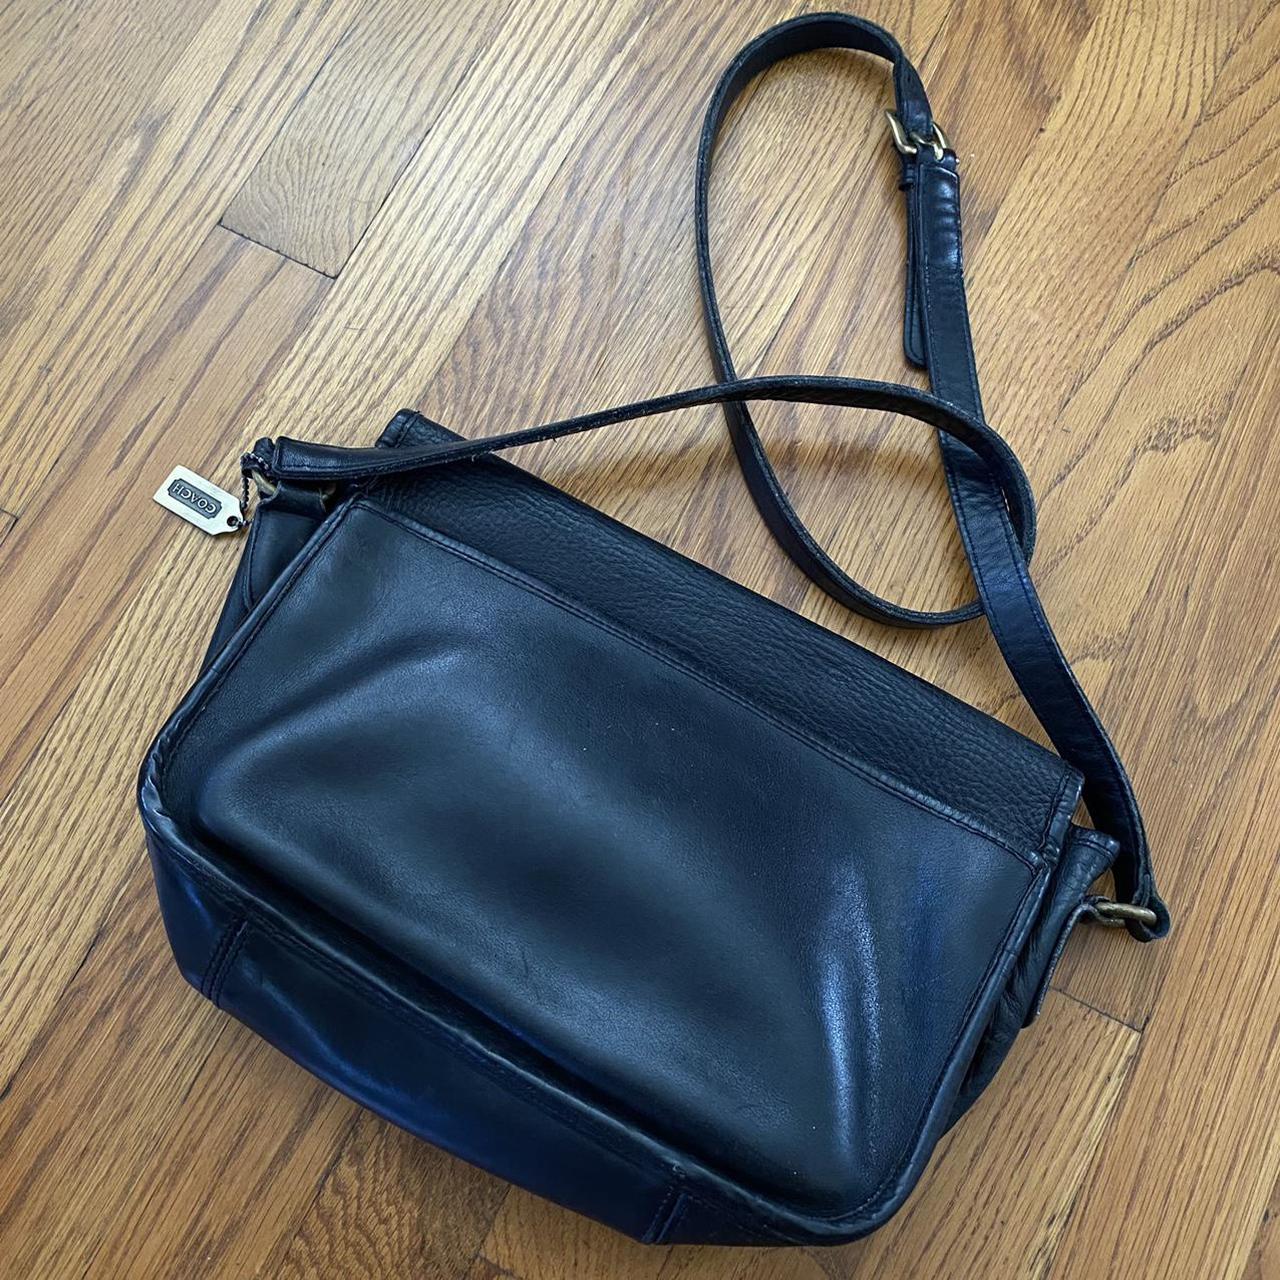 Vintage black leather Coach bag. Unisex, can be worn... - Depop